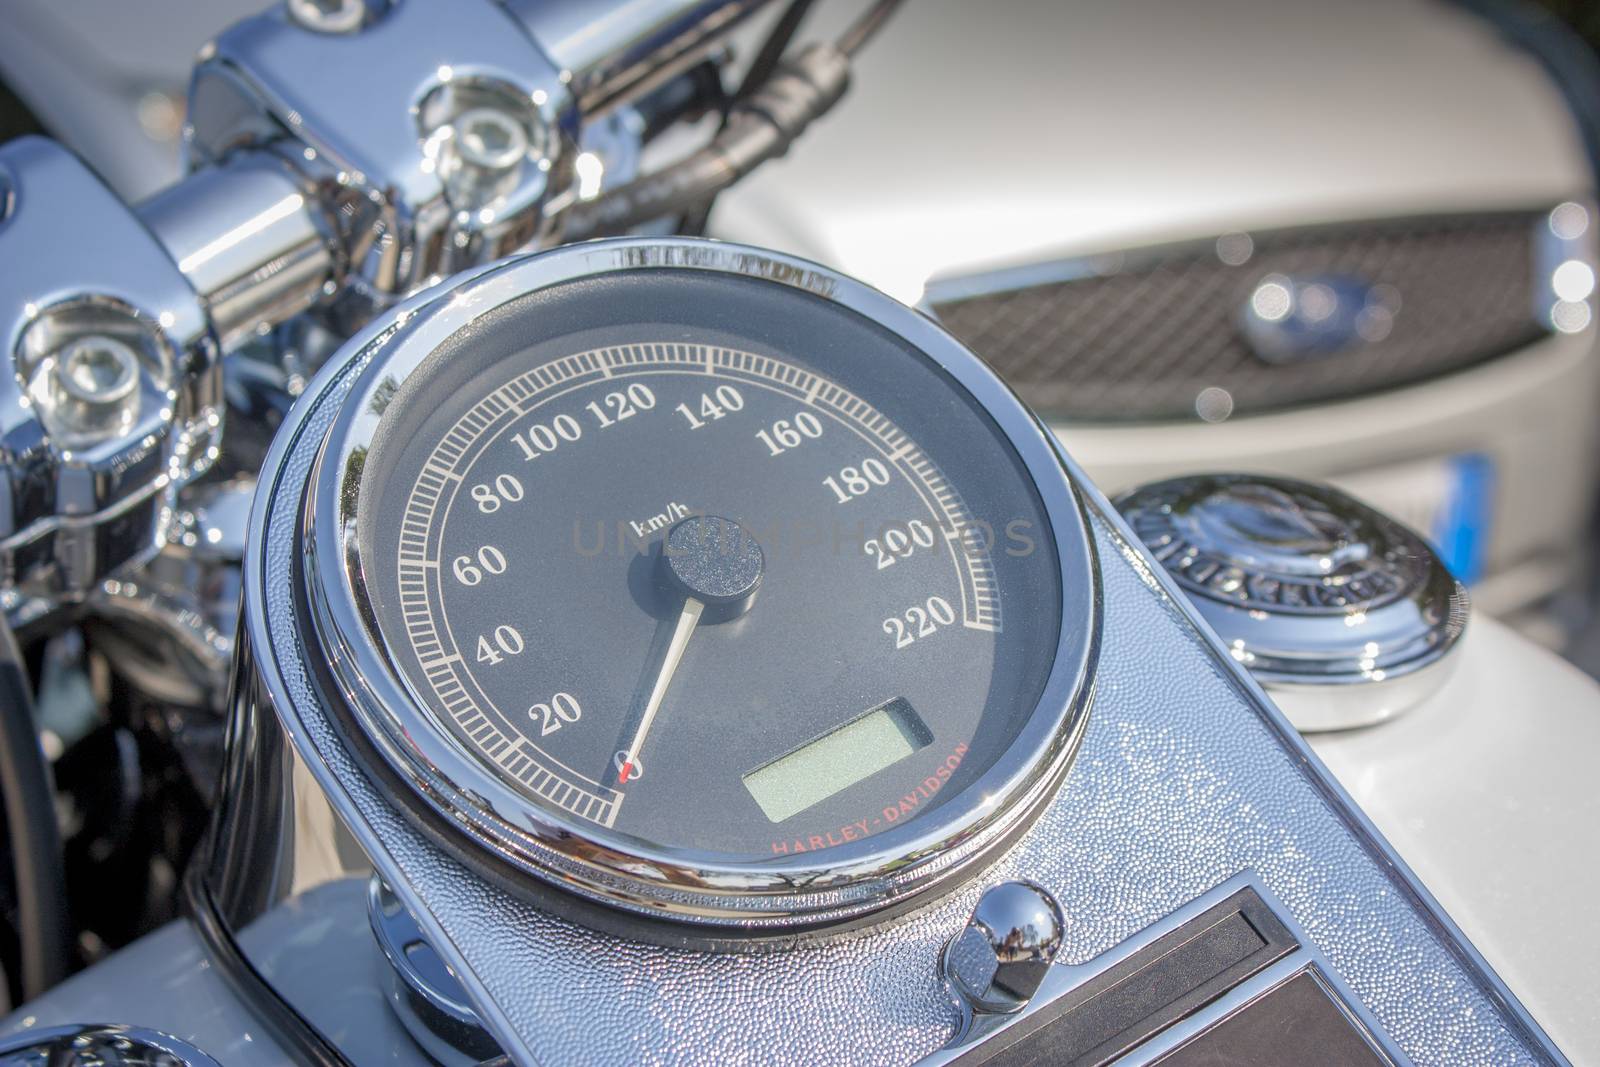 Motorbike odometer detail by pippocarlot